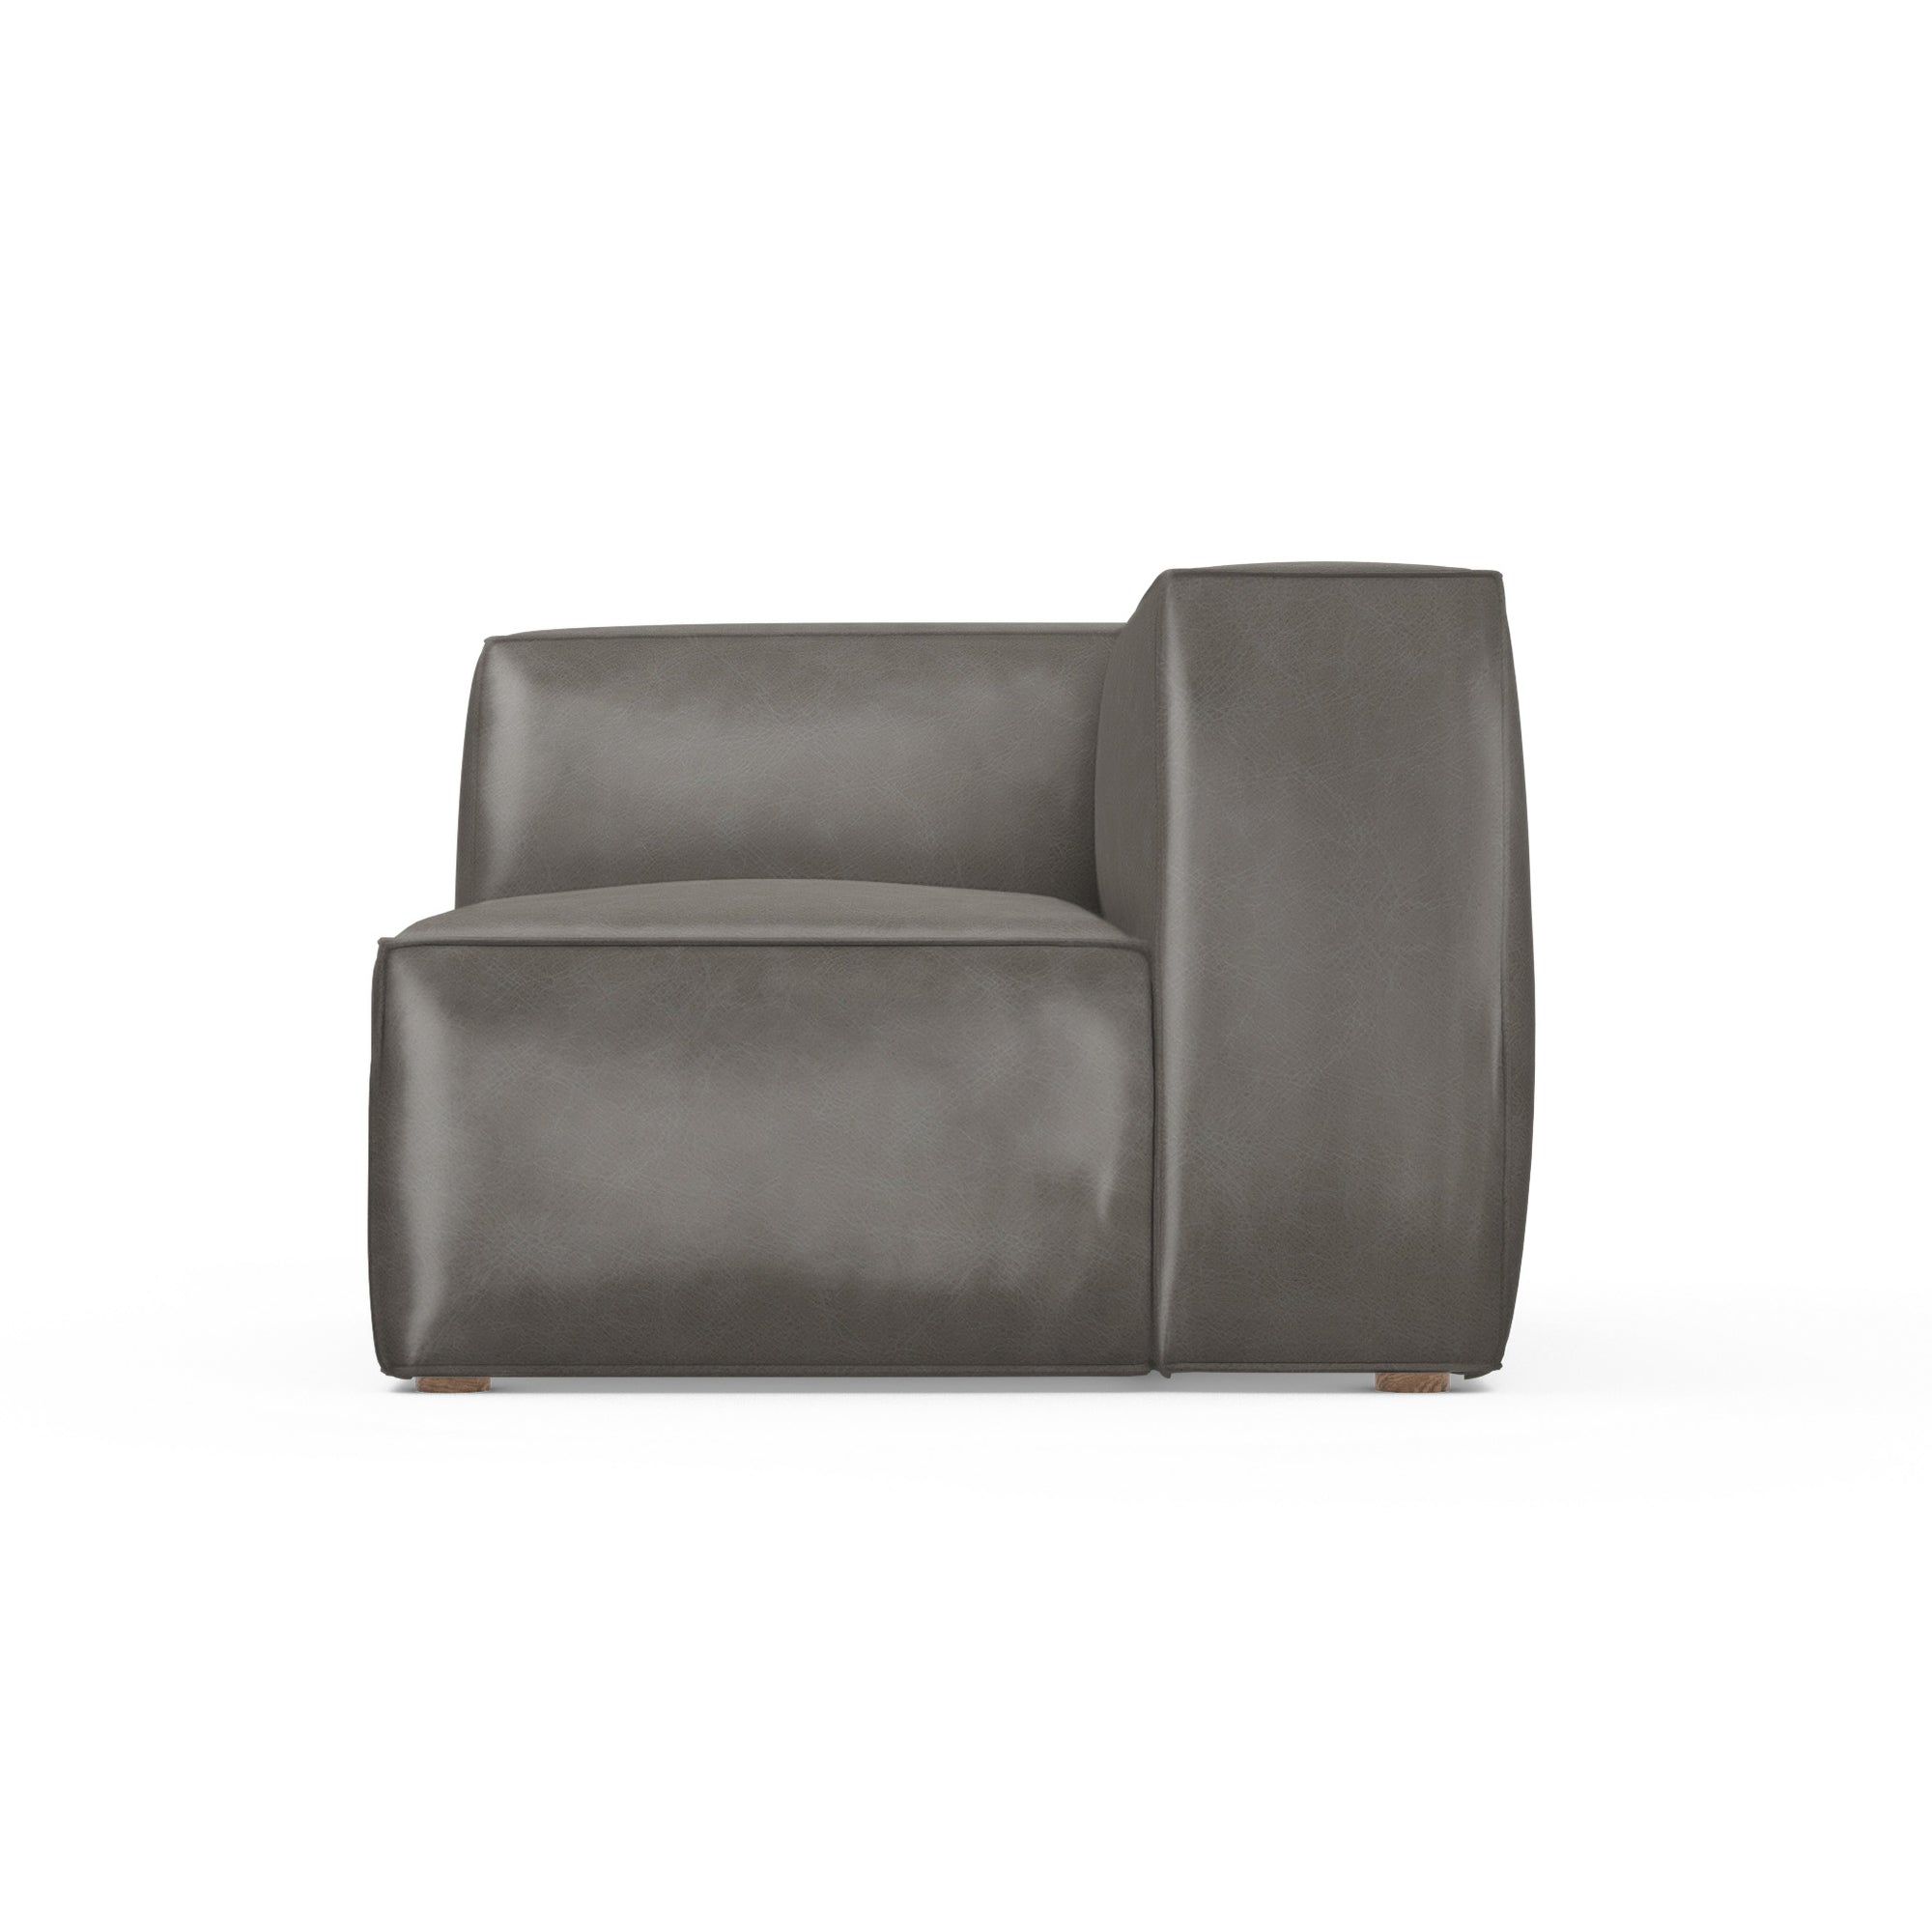 Varick Corner Chair - Pumice Vintage Leather